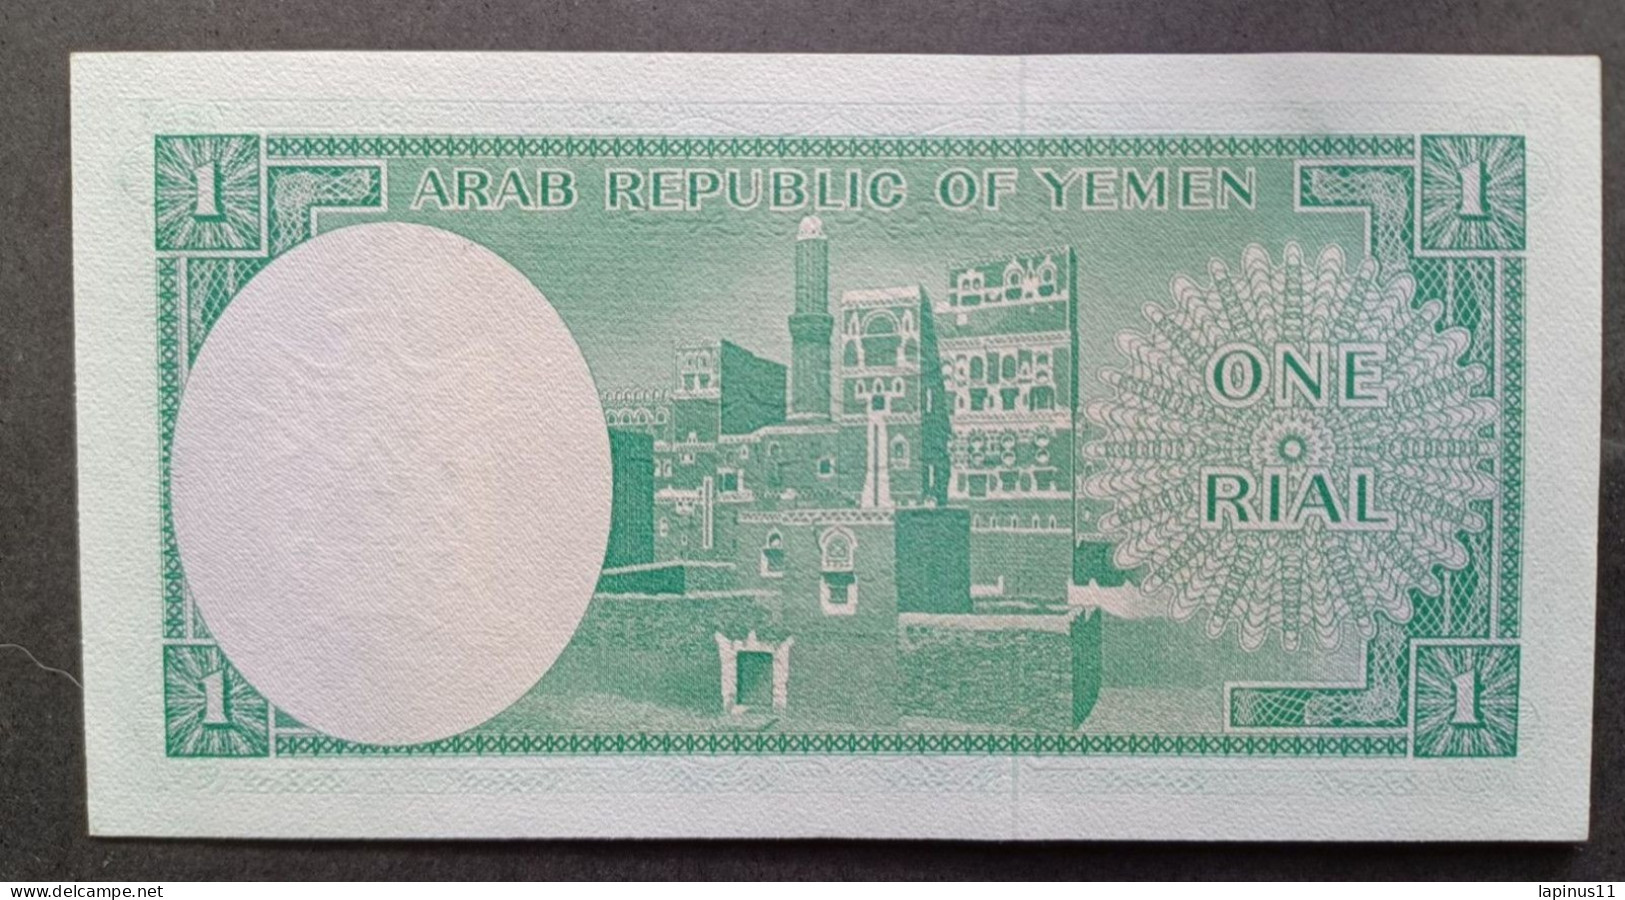 BANKNOTE اليمن YEMEN ARAB REPUBLIC 1 RIAL 1969 UNCIRCULATED SUPERB - Yemen